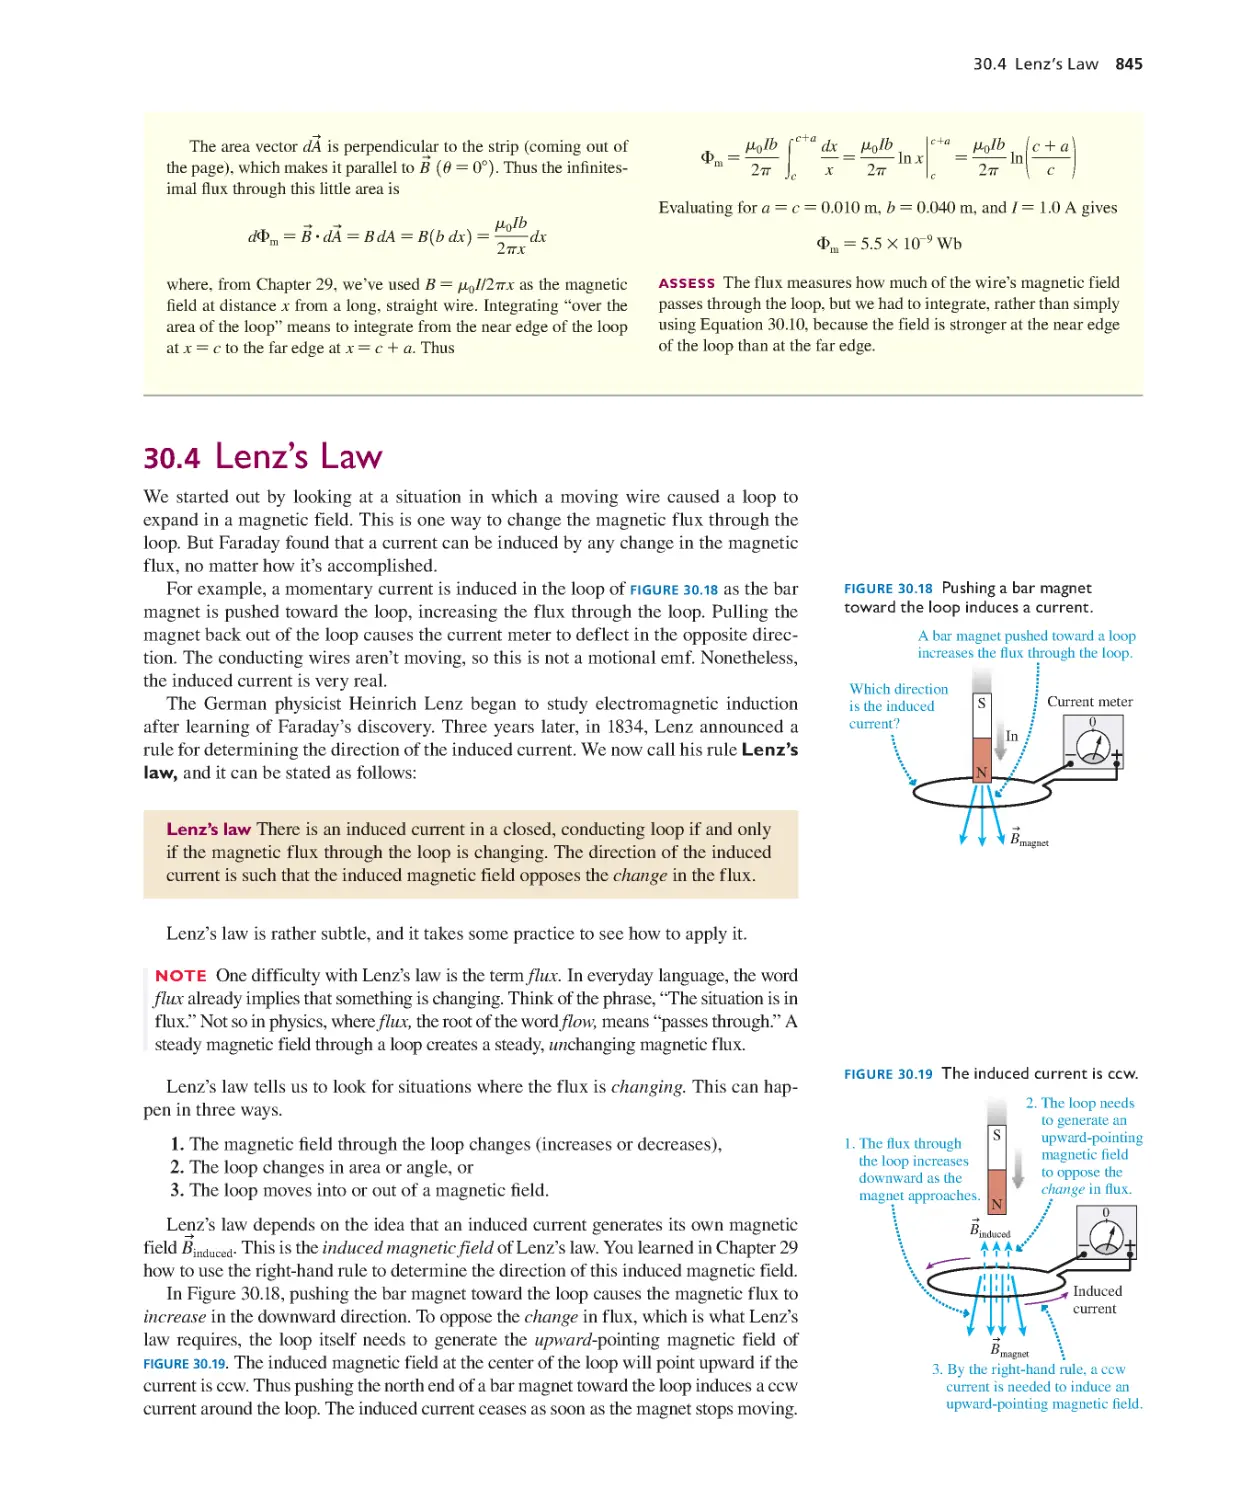 30.4. Lenz’s Law